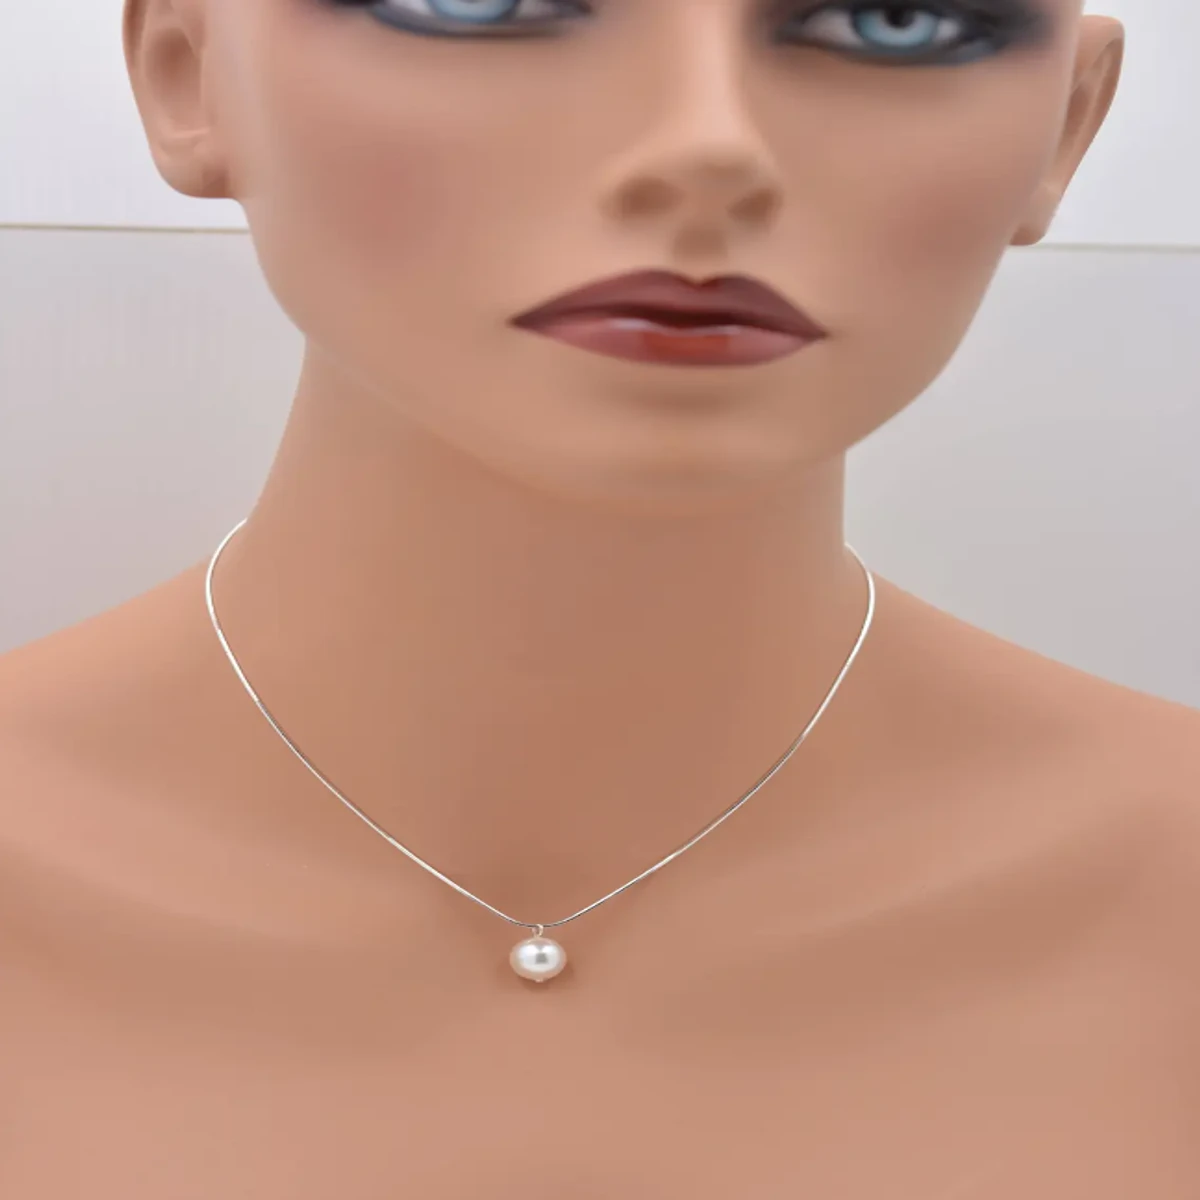 Minimalist Single Pearl Necklace stylish Girls